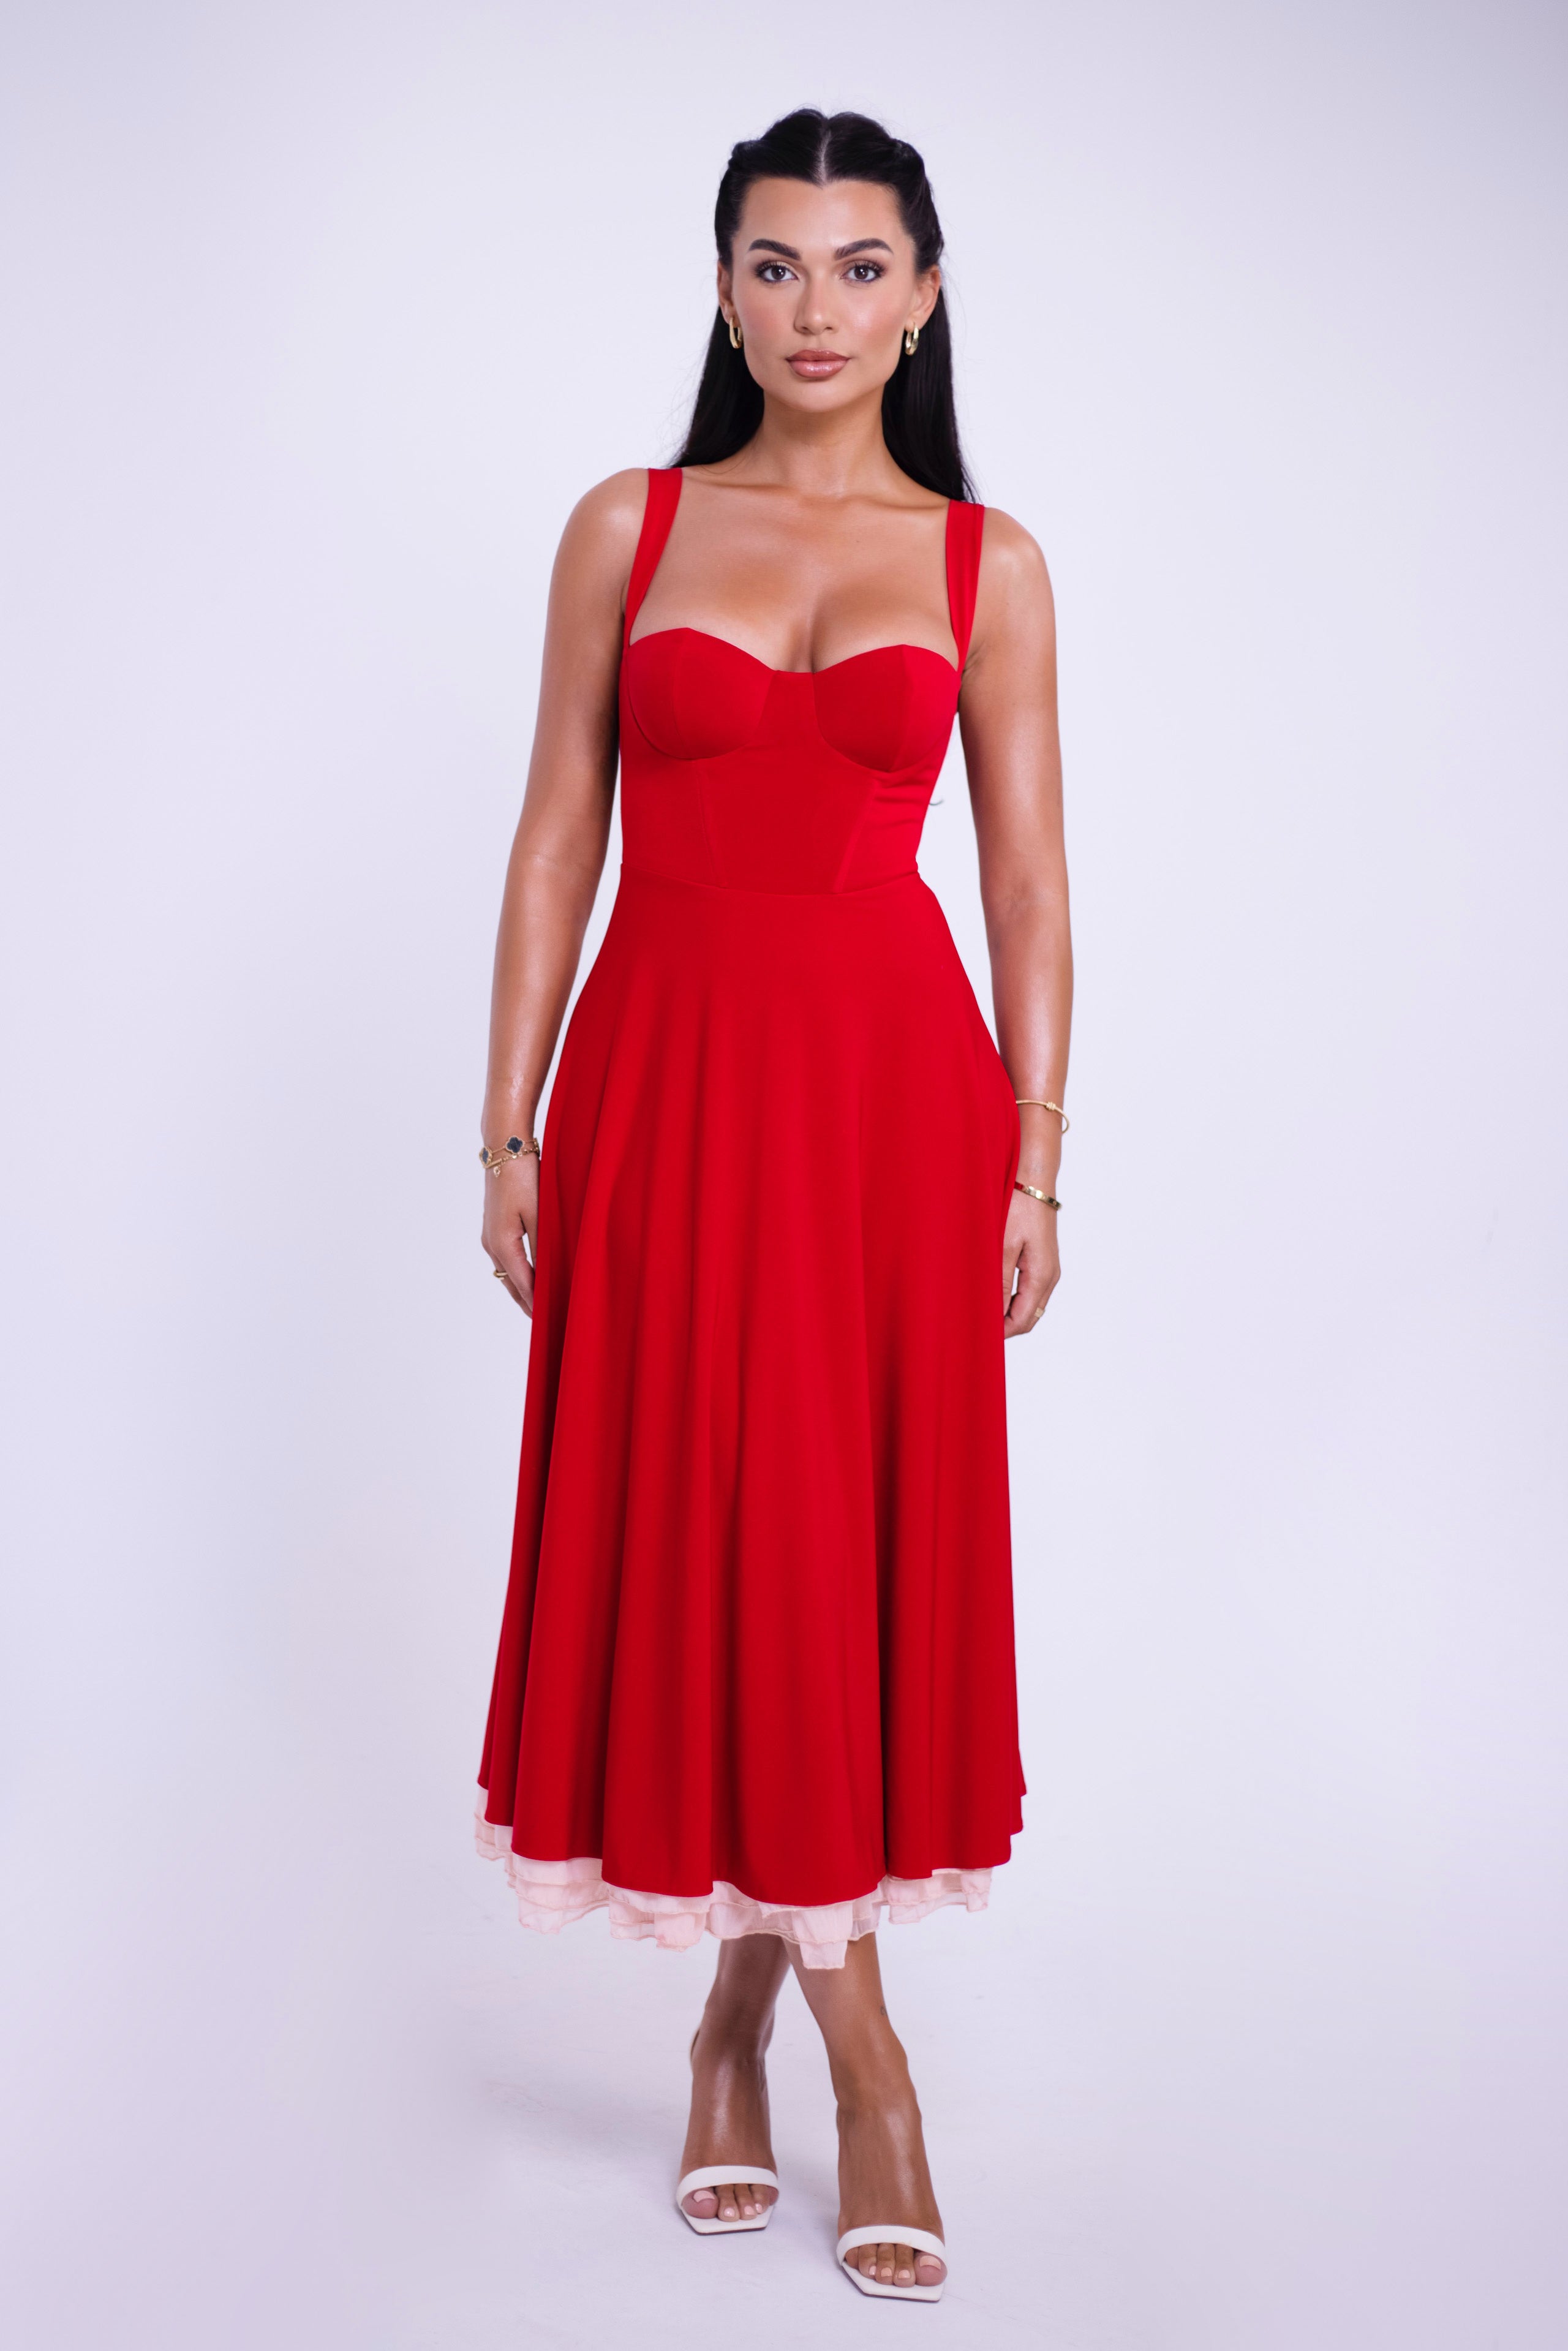 Sophie Red Dress